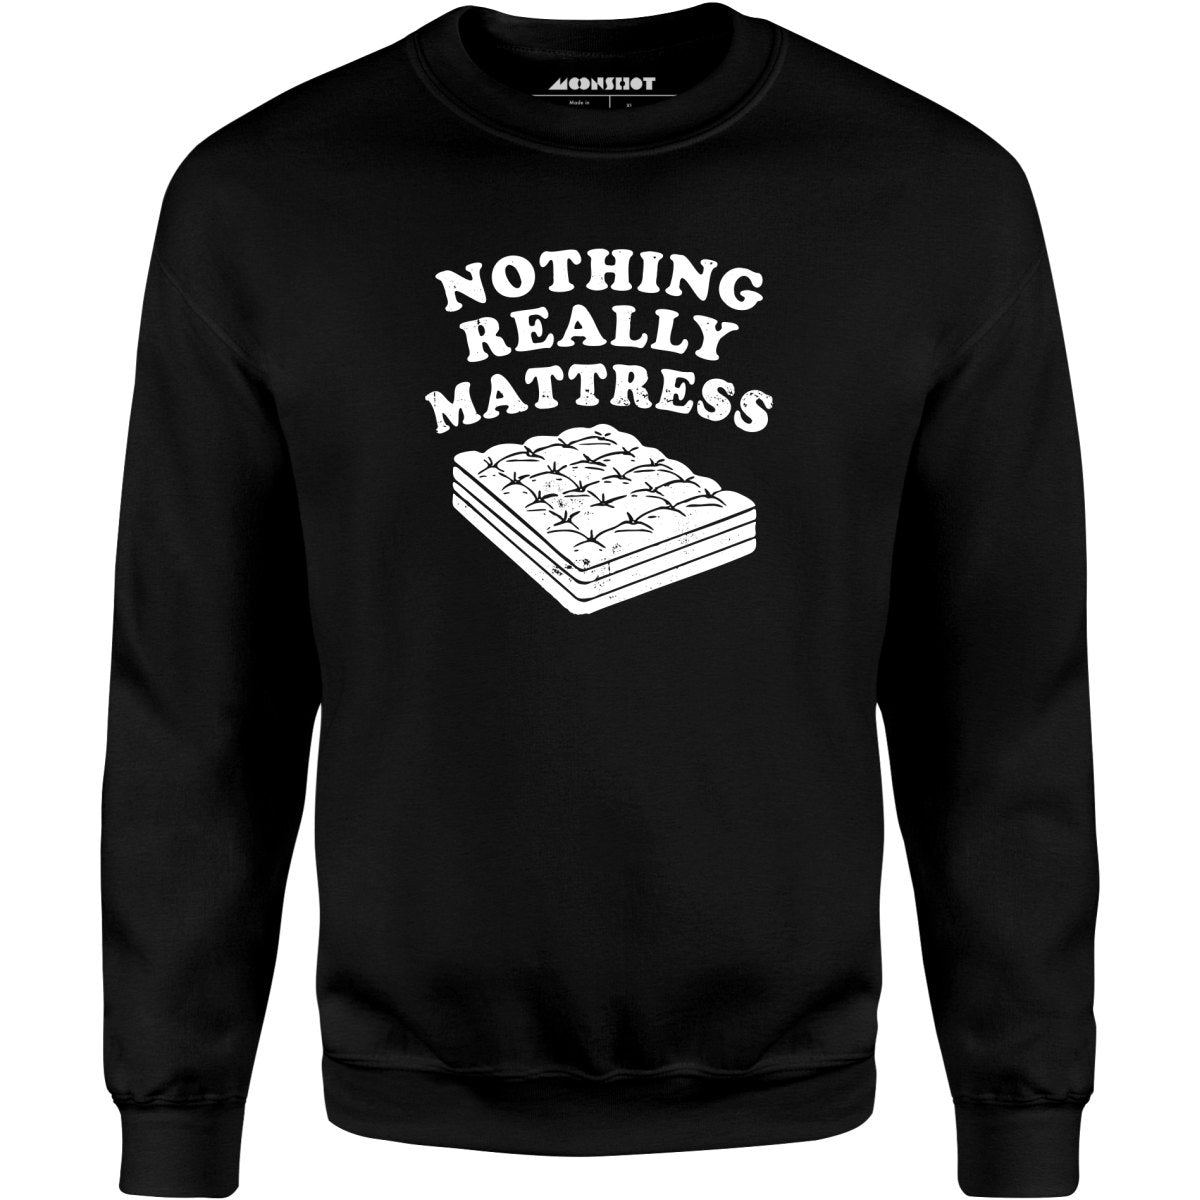 Nothing Really Mattress - Unisex Sweatshirt